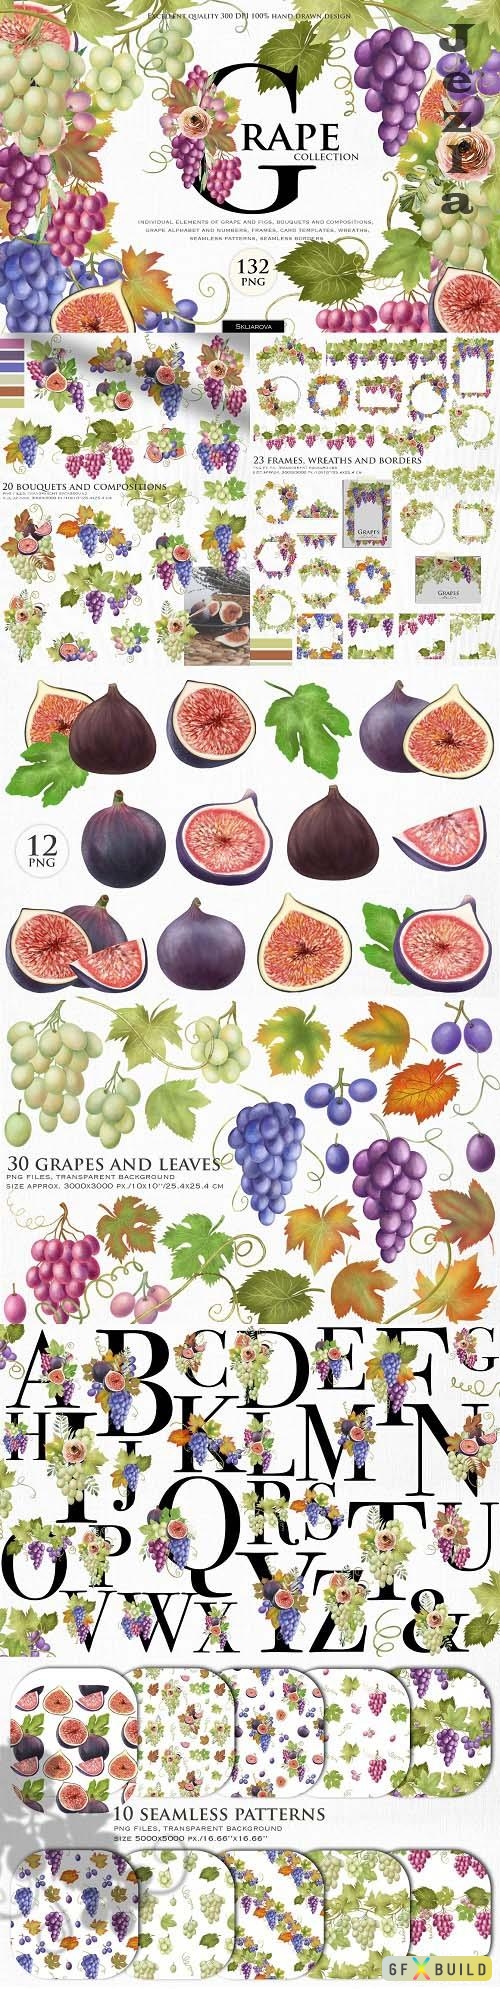 Grape collection - 6260638